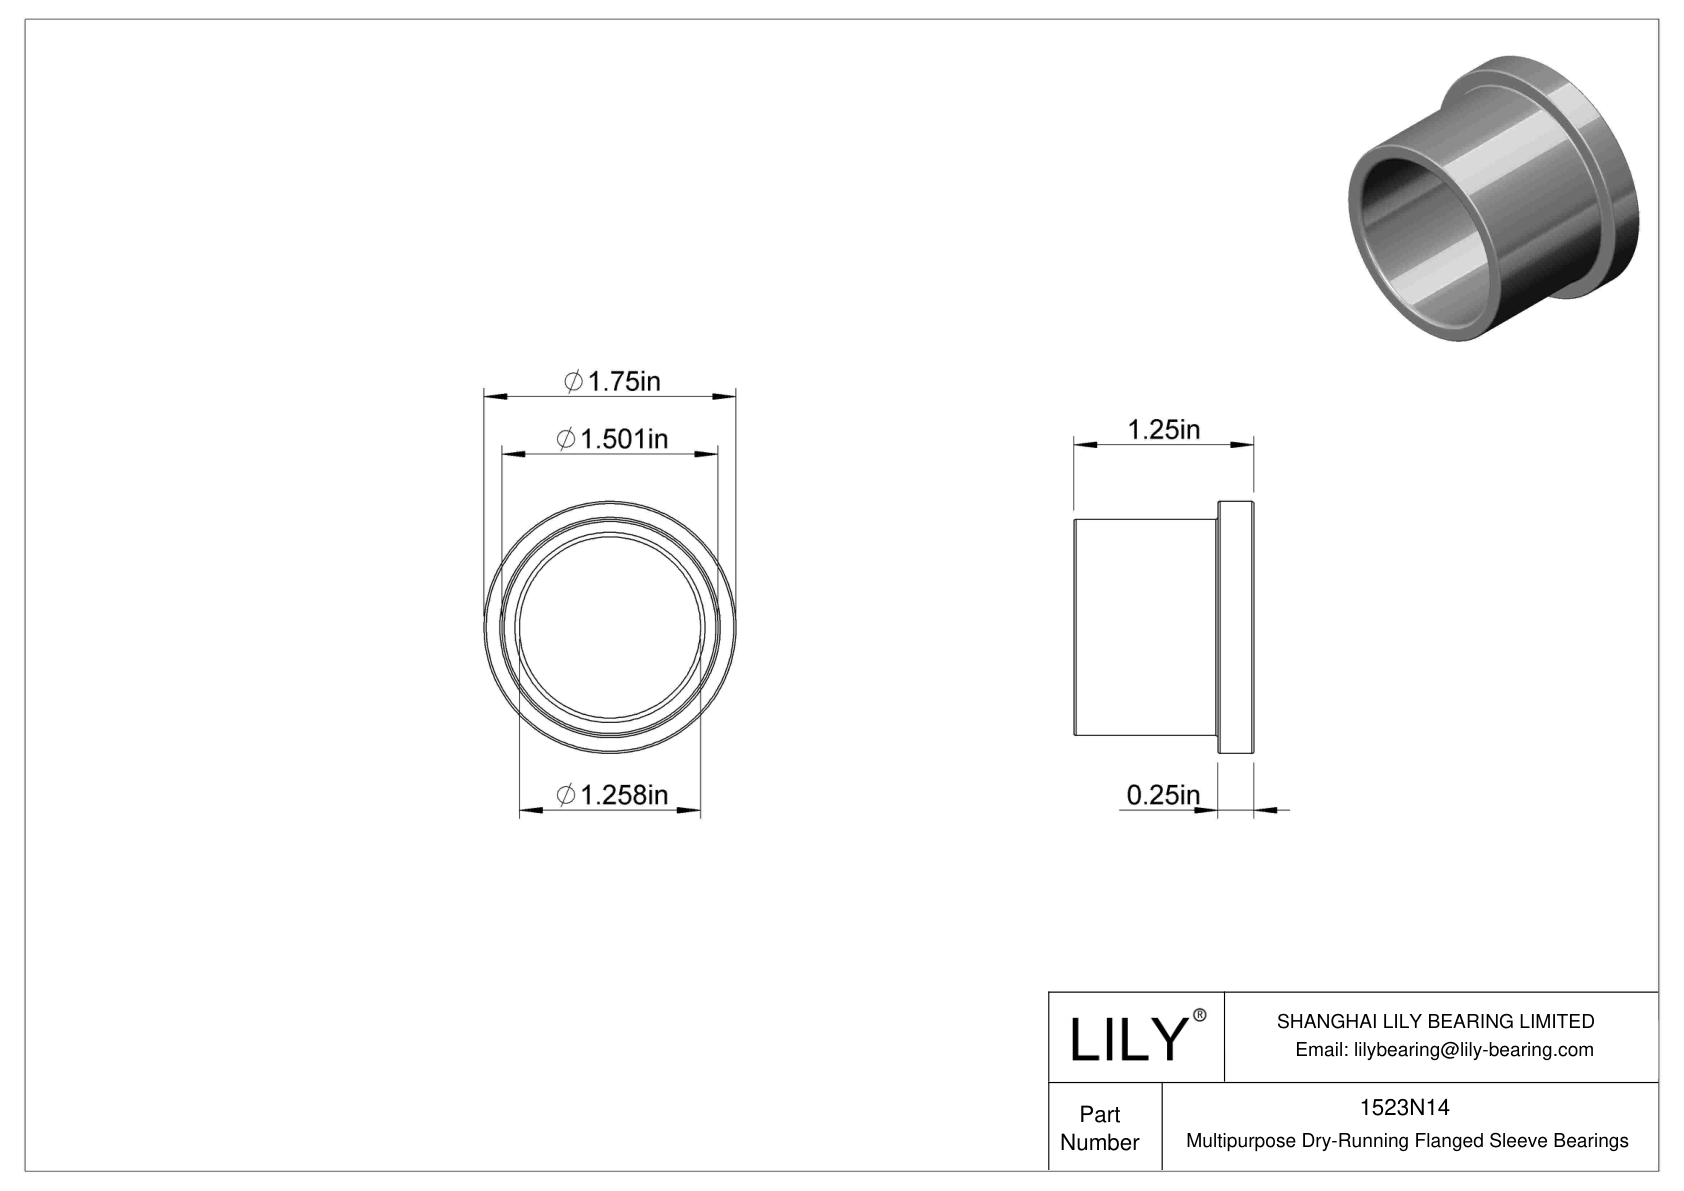 BFCDNBE Multipurpose Dry-Running Flanged Sleeve Bearings cad drawing